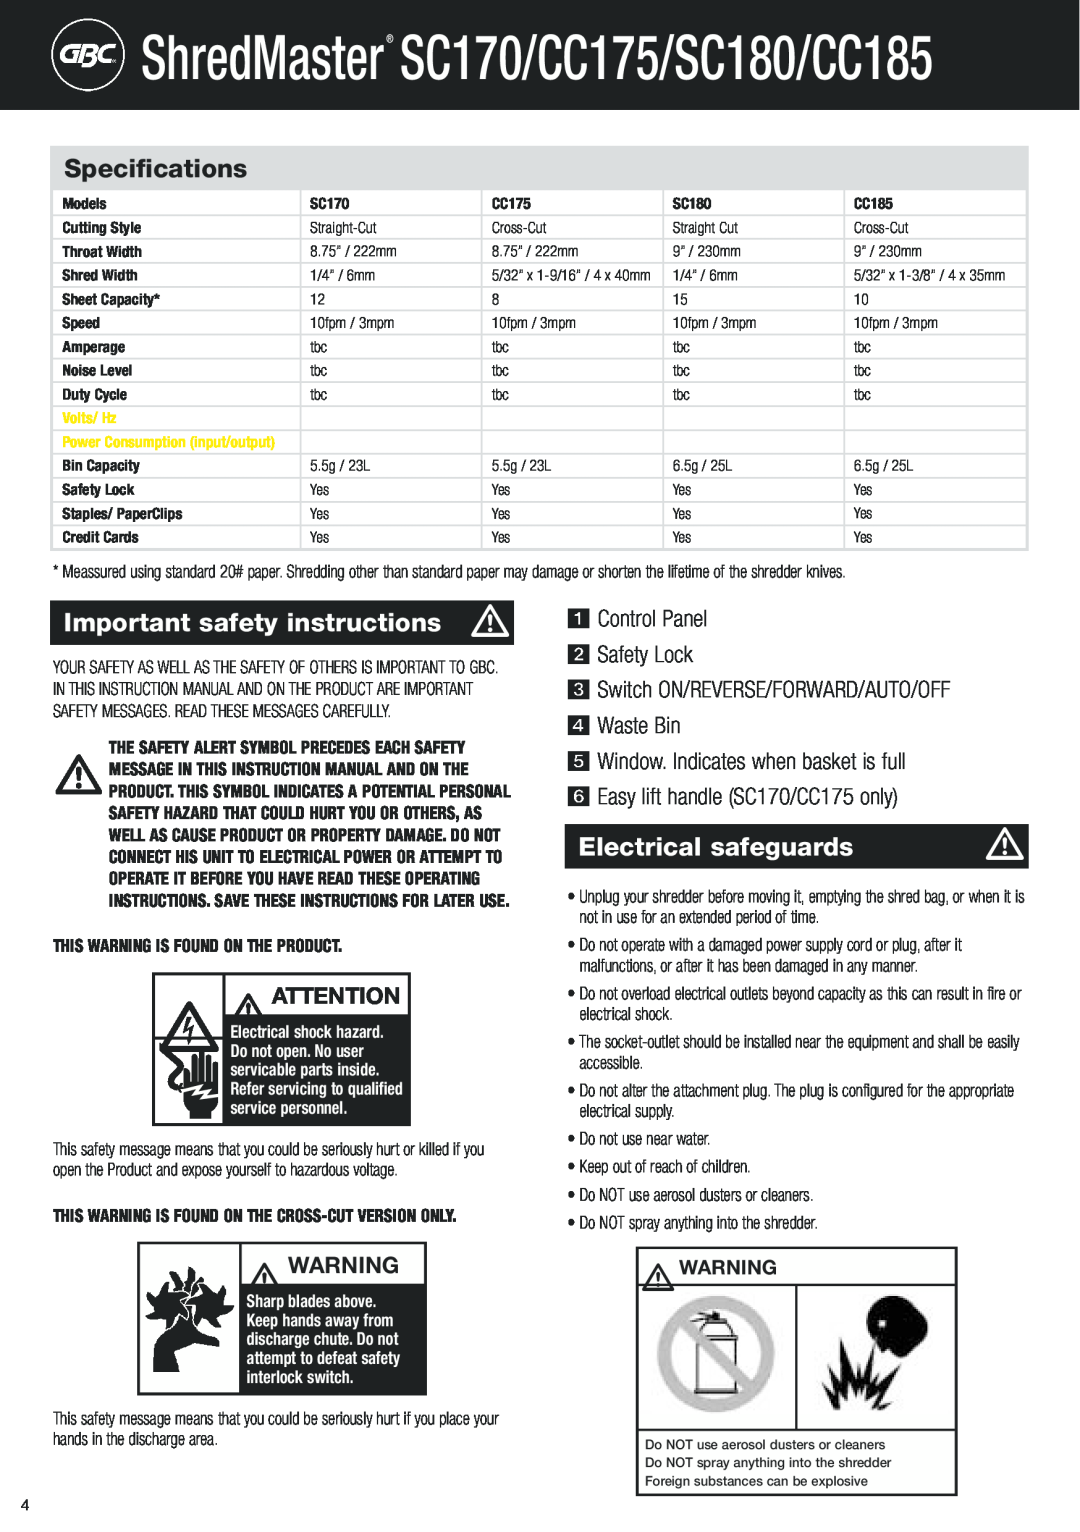 GBC ShredMaster SC170/CC175/SC180/CC185, Important safety instructions, Electrical safeguards, service personnel 